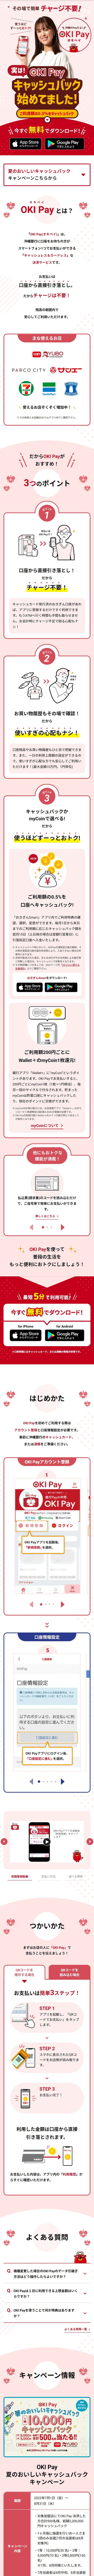 OKI Pay_sp_1